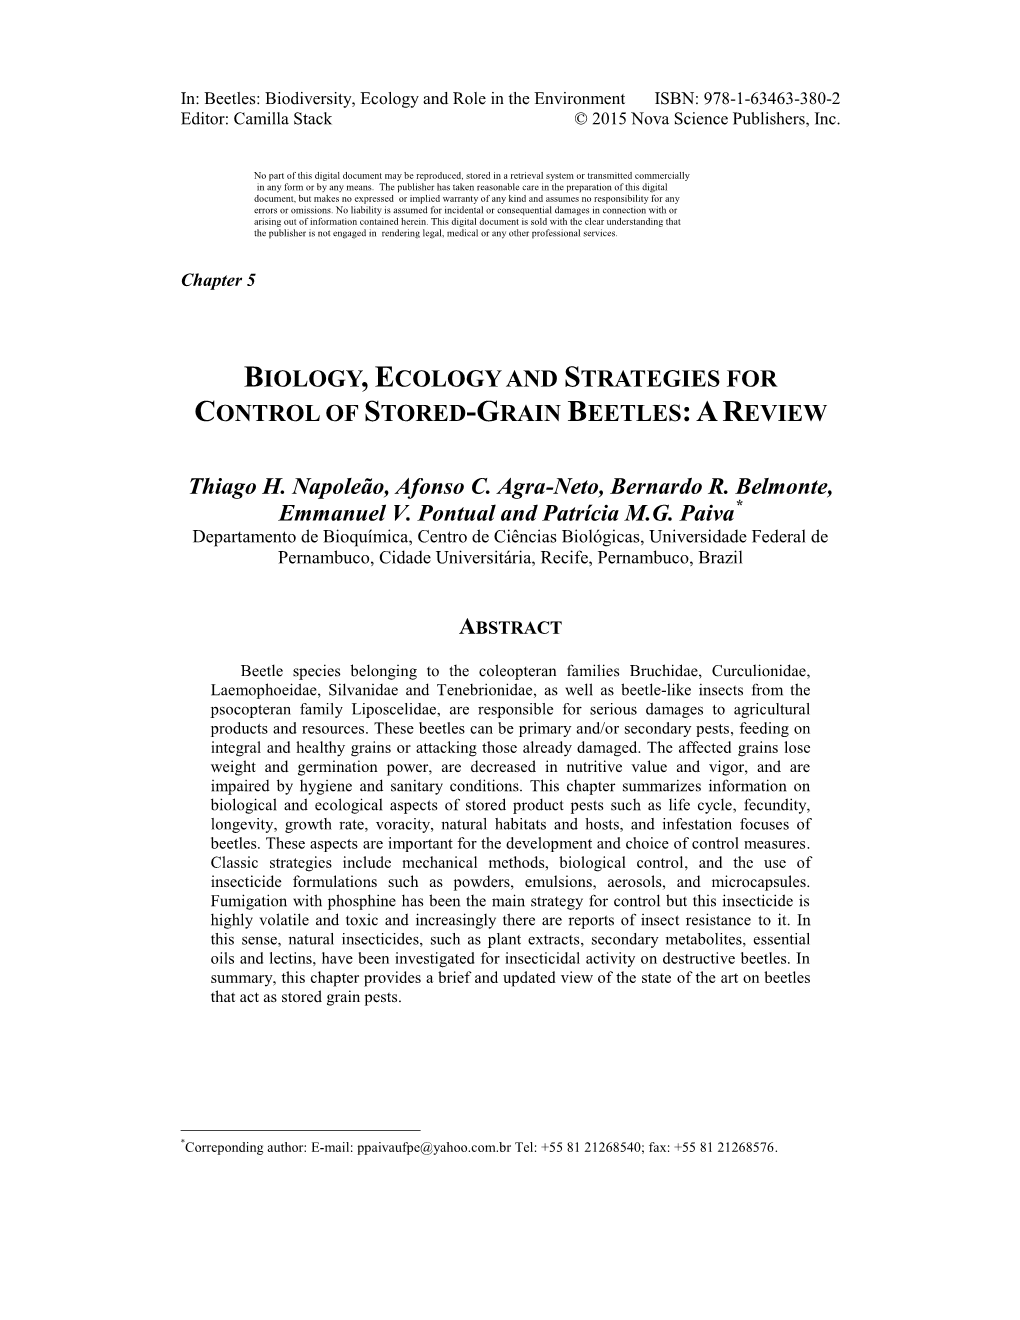 BIOLOGY, ECOLOGY and STRATEGIES for CONTROL of STORED-GRAIN BEETLES:AR EVIEW Thiago H. Napoleão, Afonso C. Agra-Neto, Bernardo